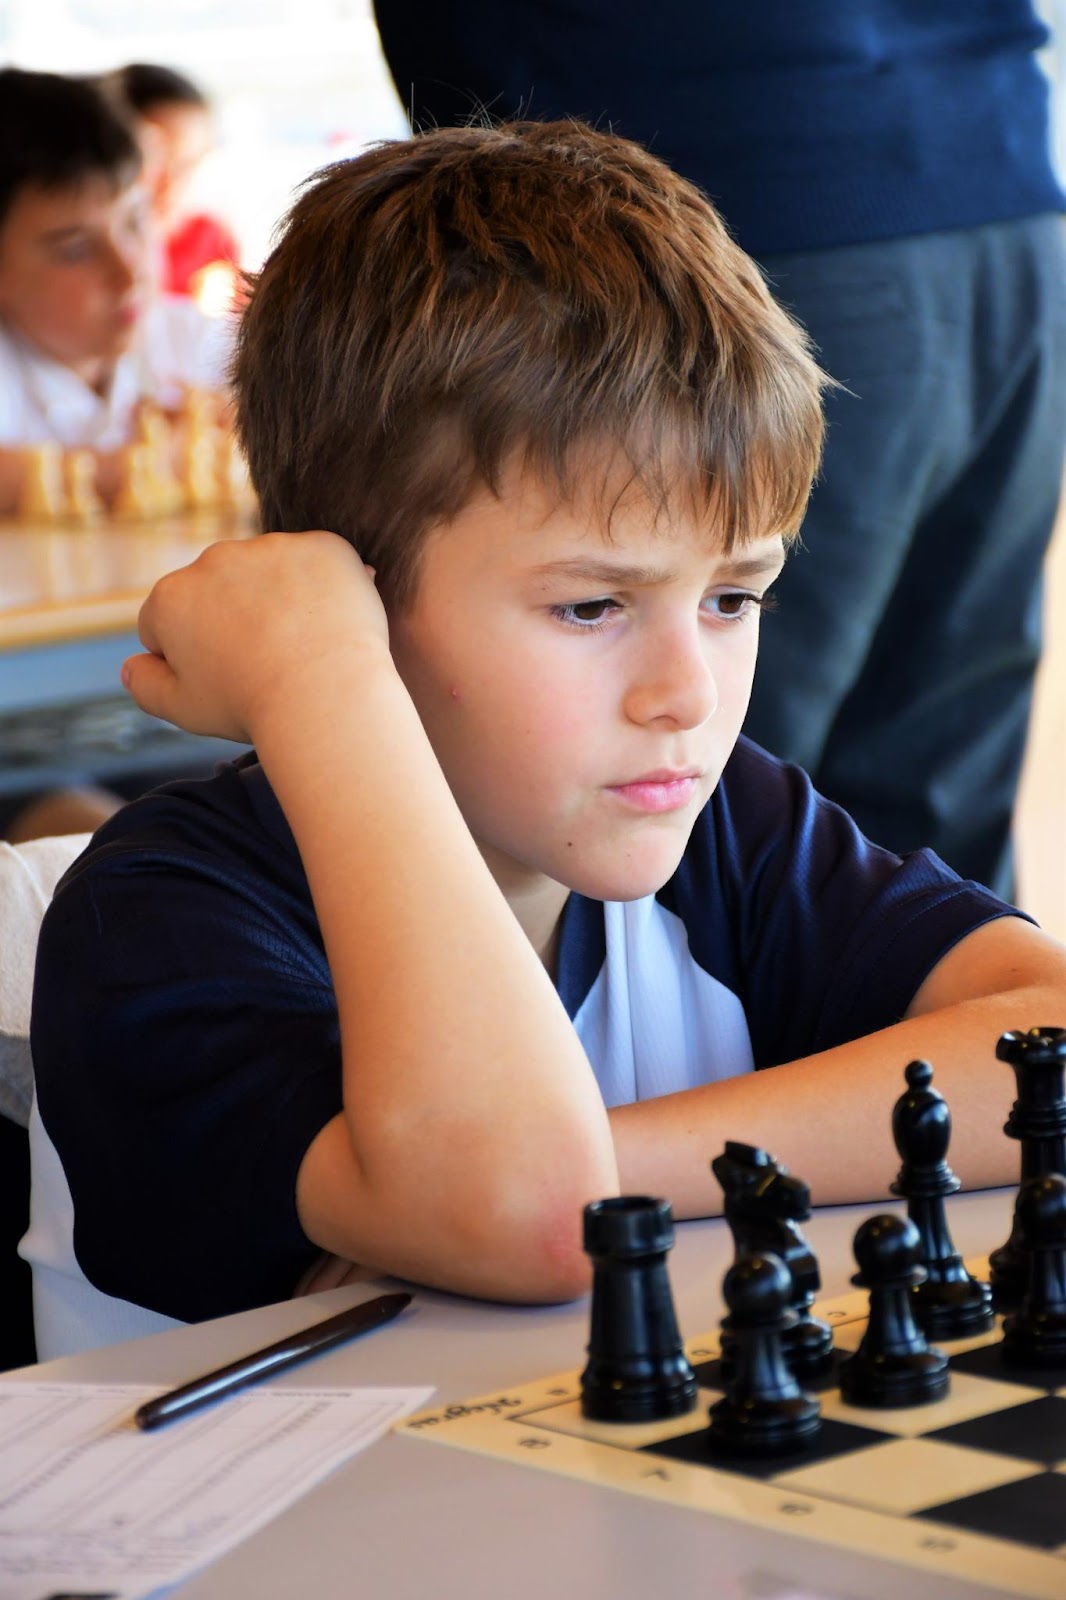 Podemos evitar la Taimanov? – Chess Excelsior